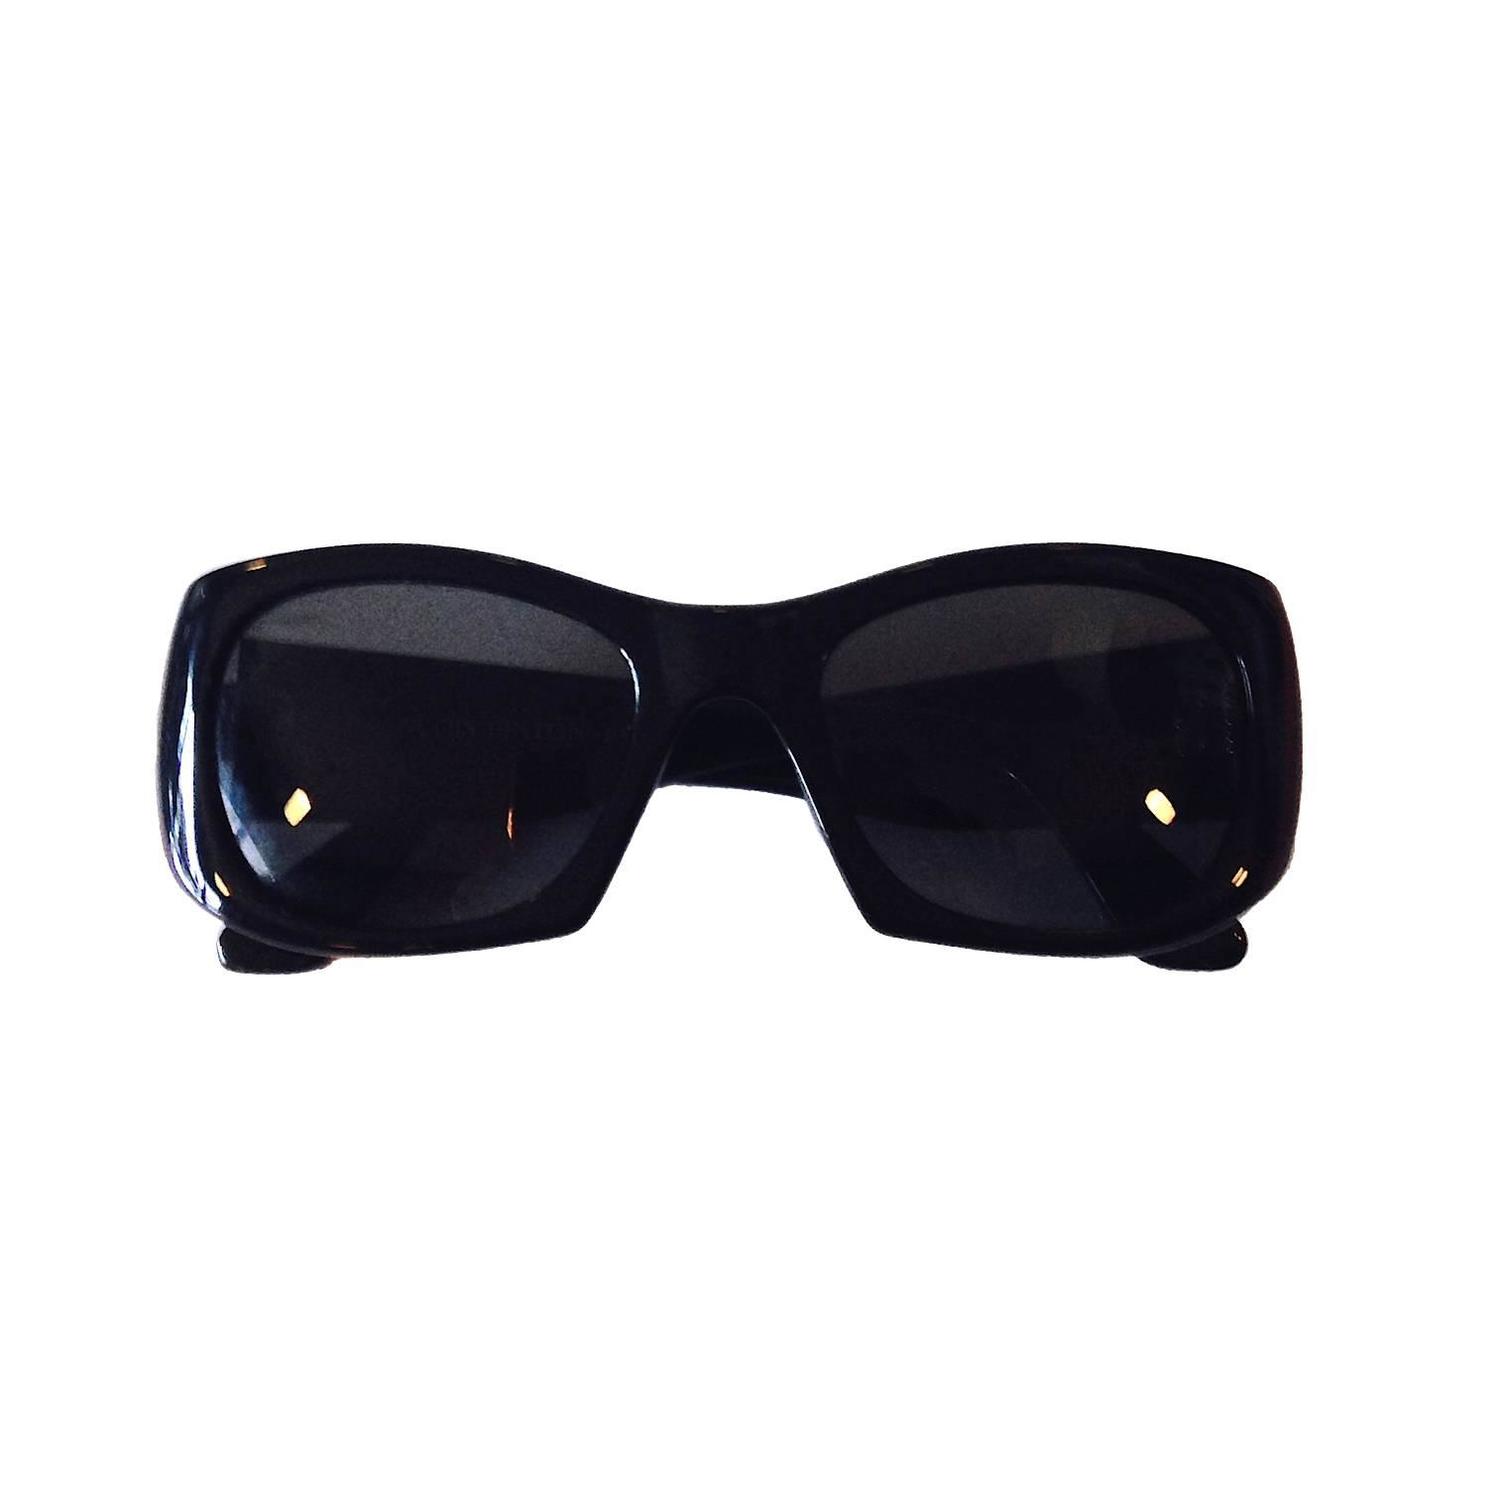 Original 1960s Design Sunglasses Style worn by Aristotle Onassis at 1stdibs